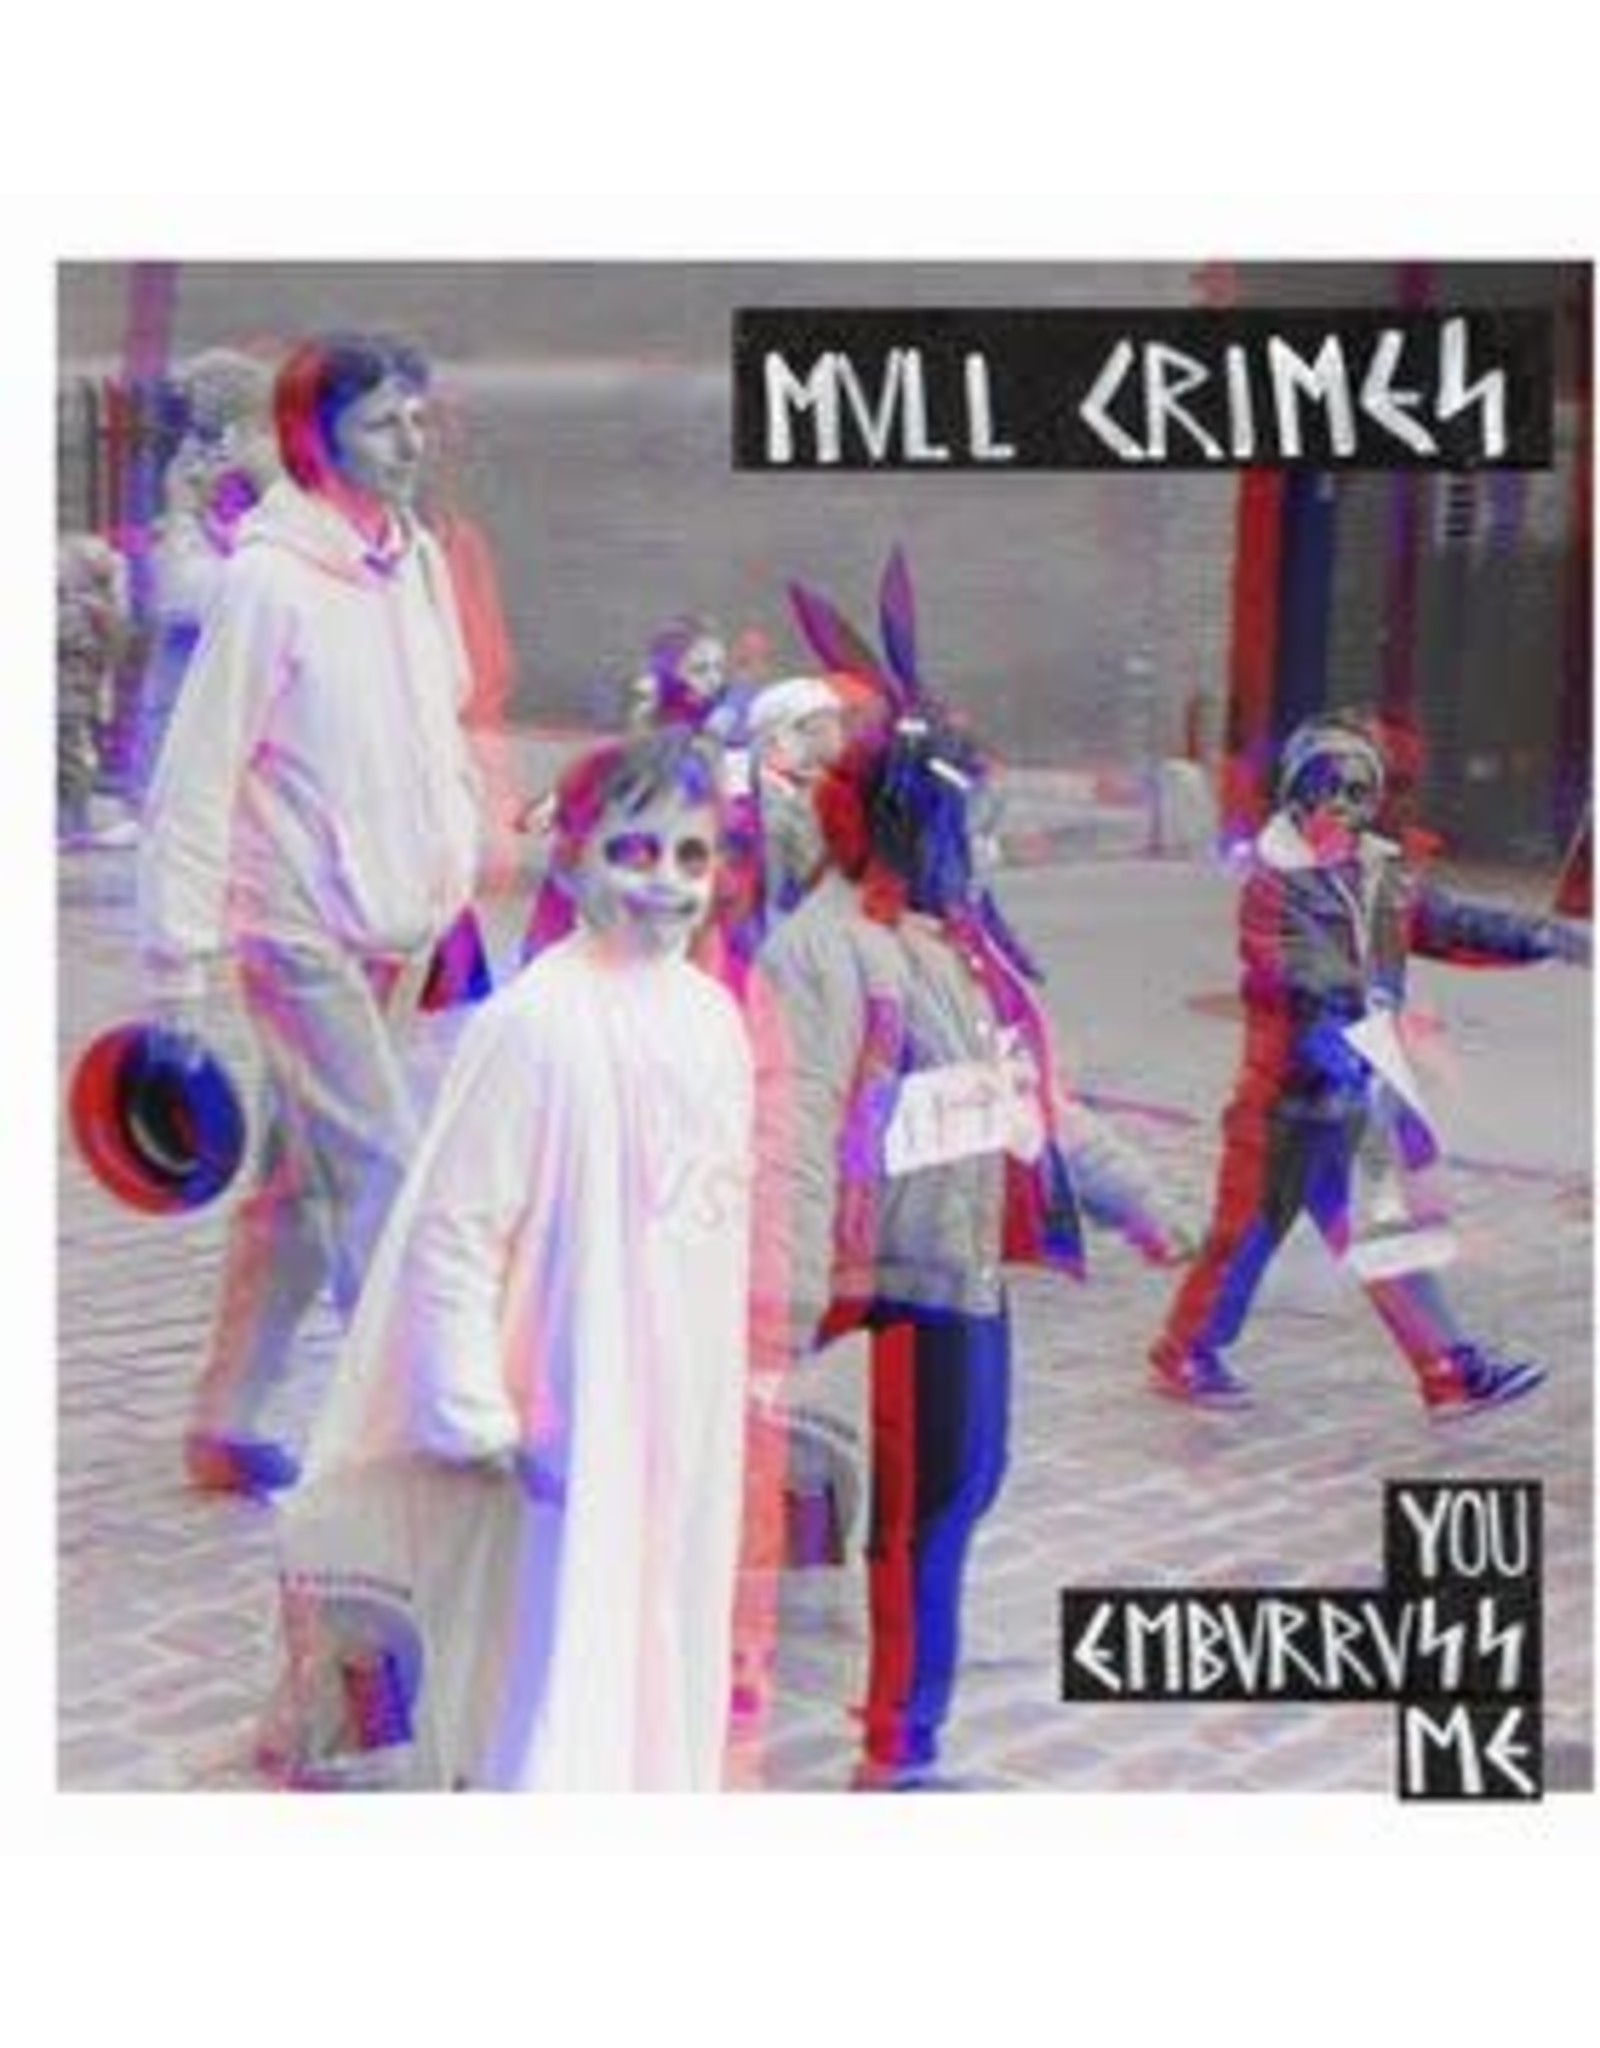 Mvll Crimes - You Embvrvss Me EP LP